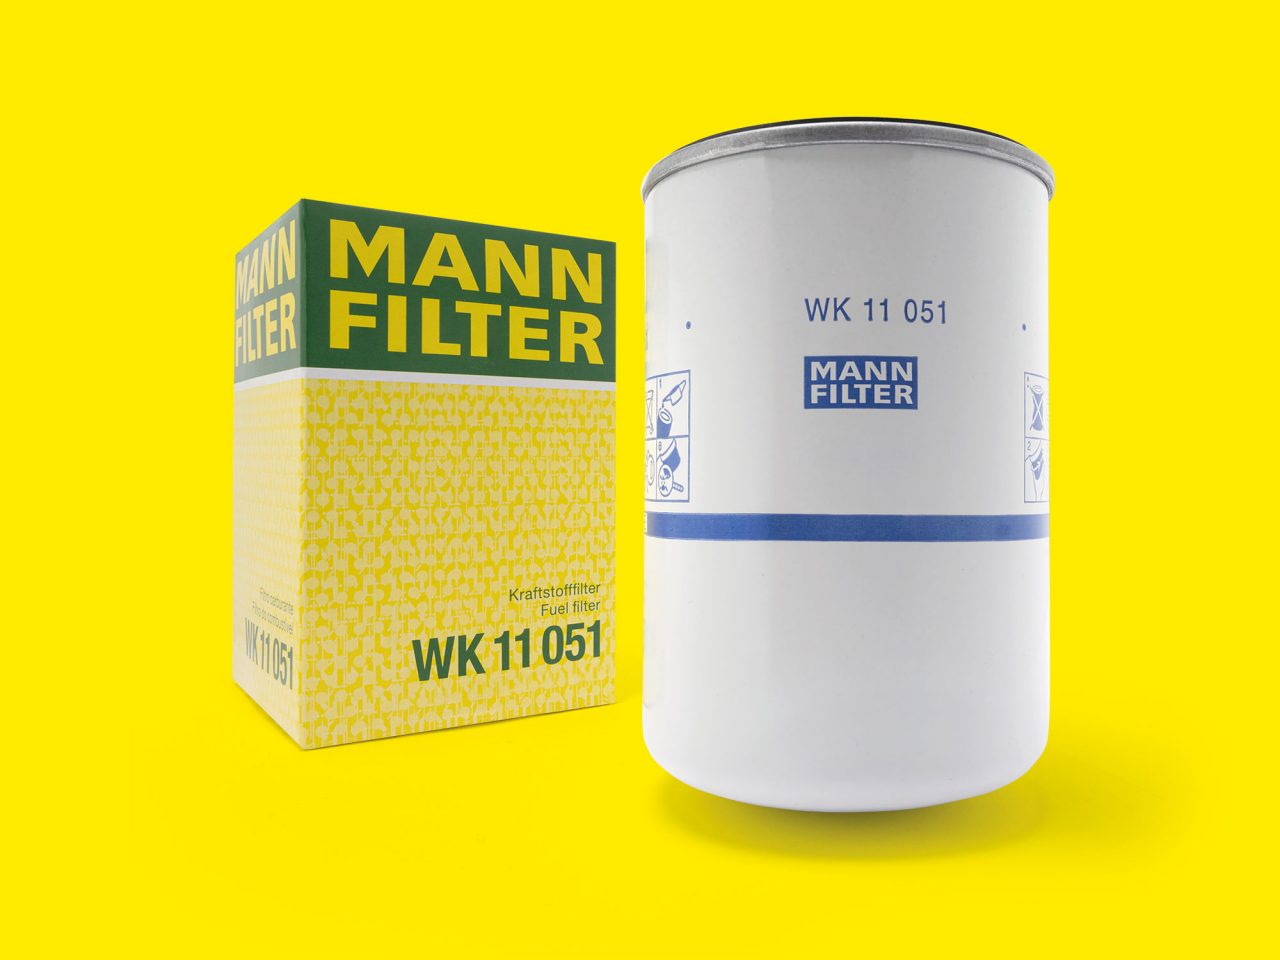 Finest filtration with MANN-FILTER fuel filter